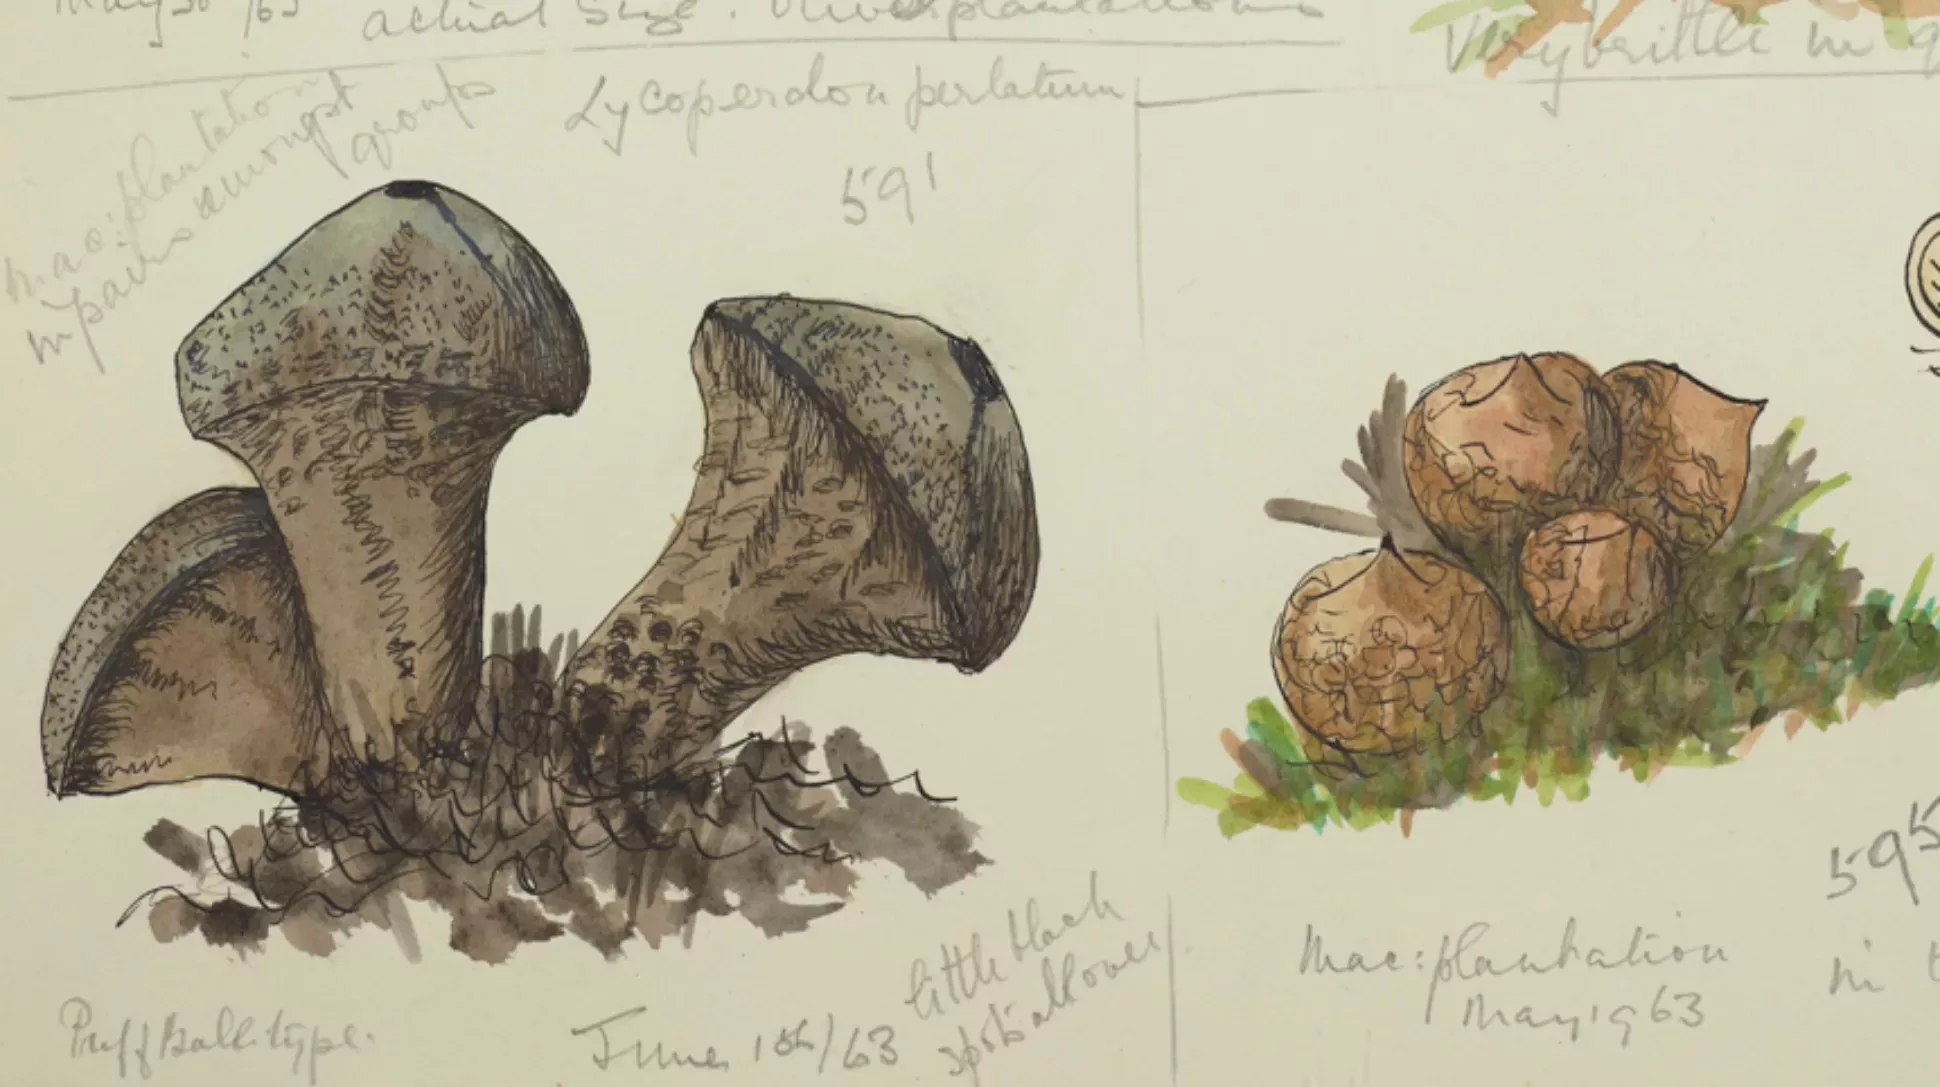 Watercolor sketches of various mushrooms